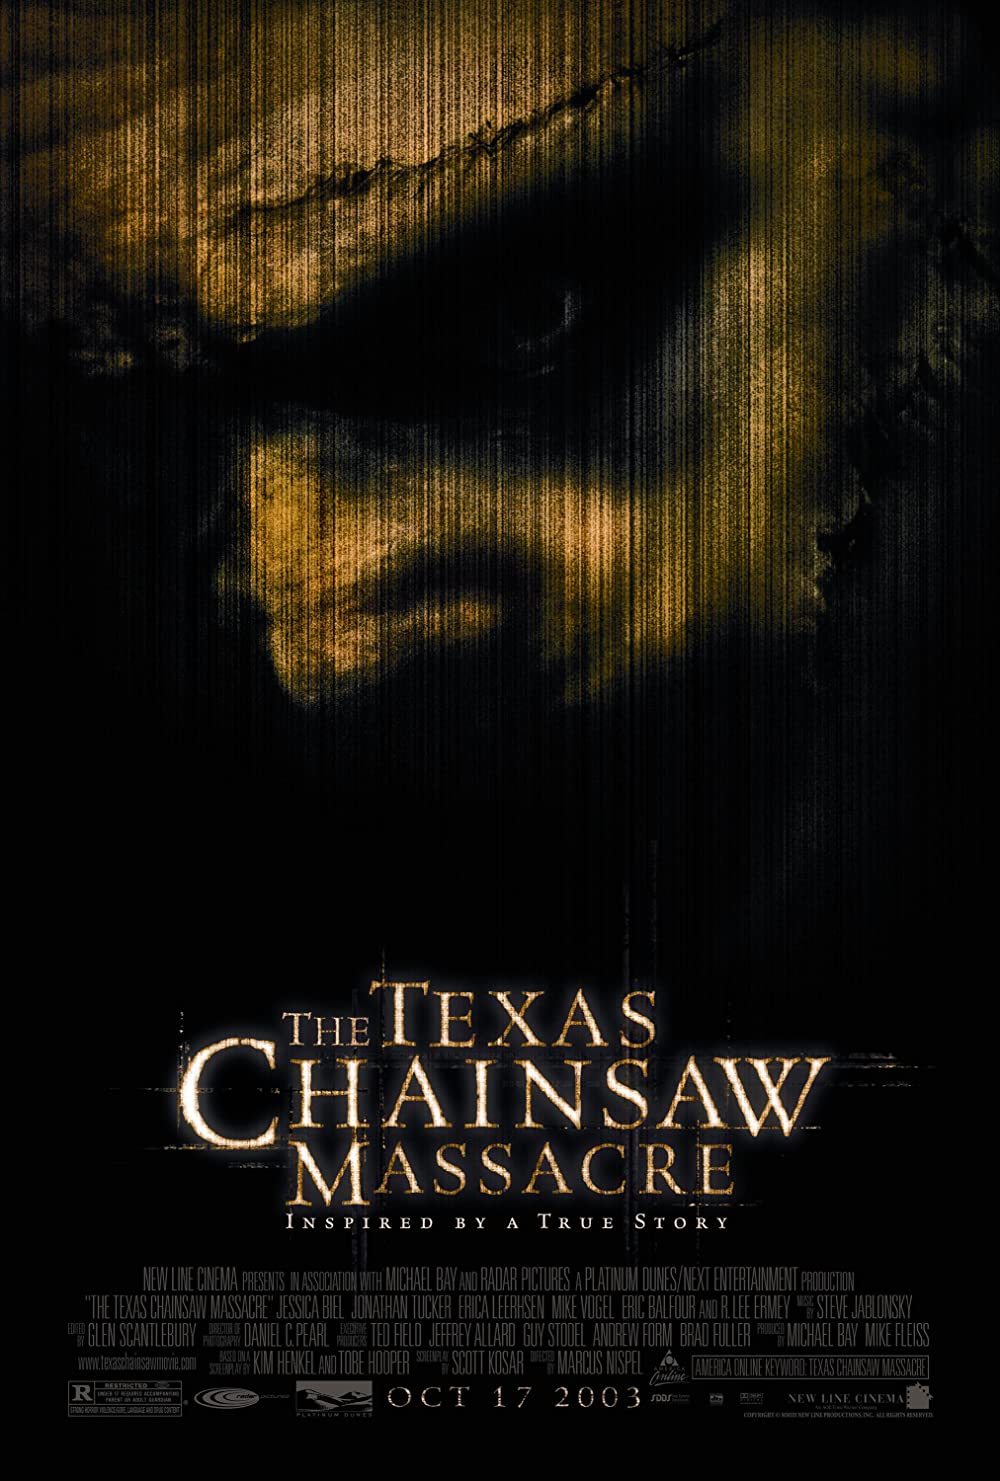 Filmbeschreibung zu Michael Bay's Texas Chainsaw Massacre